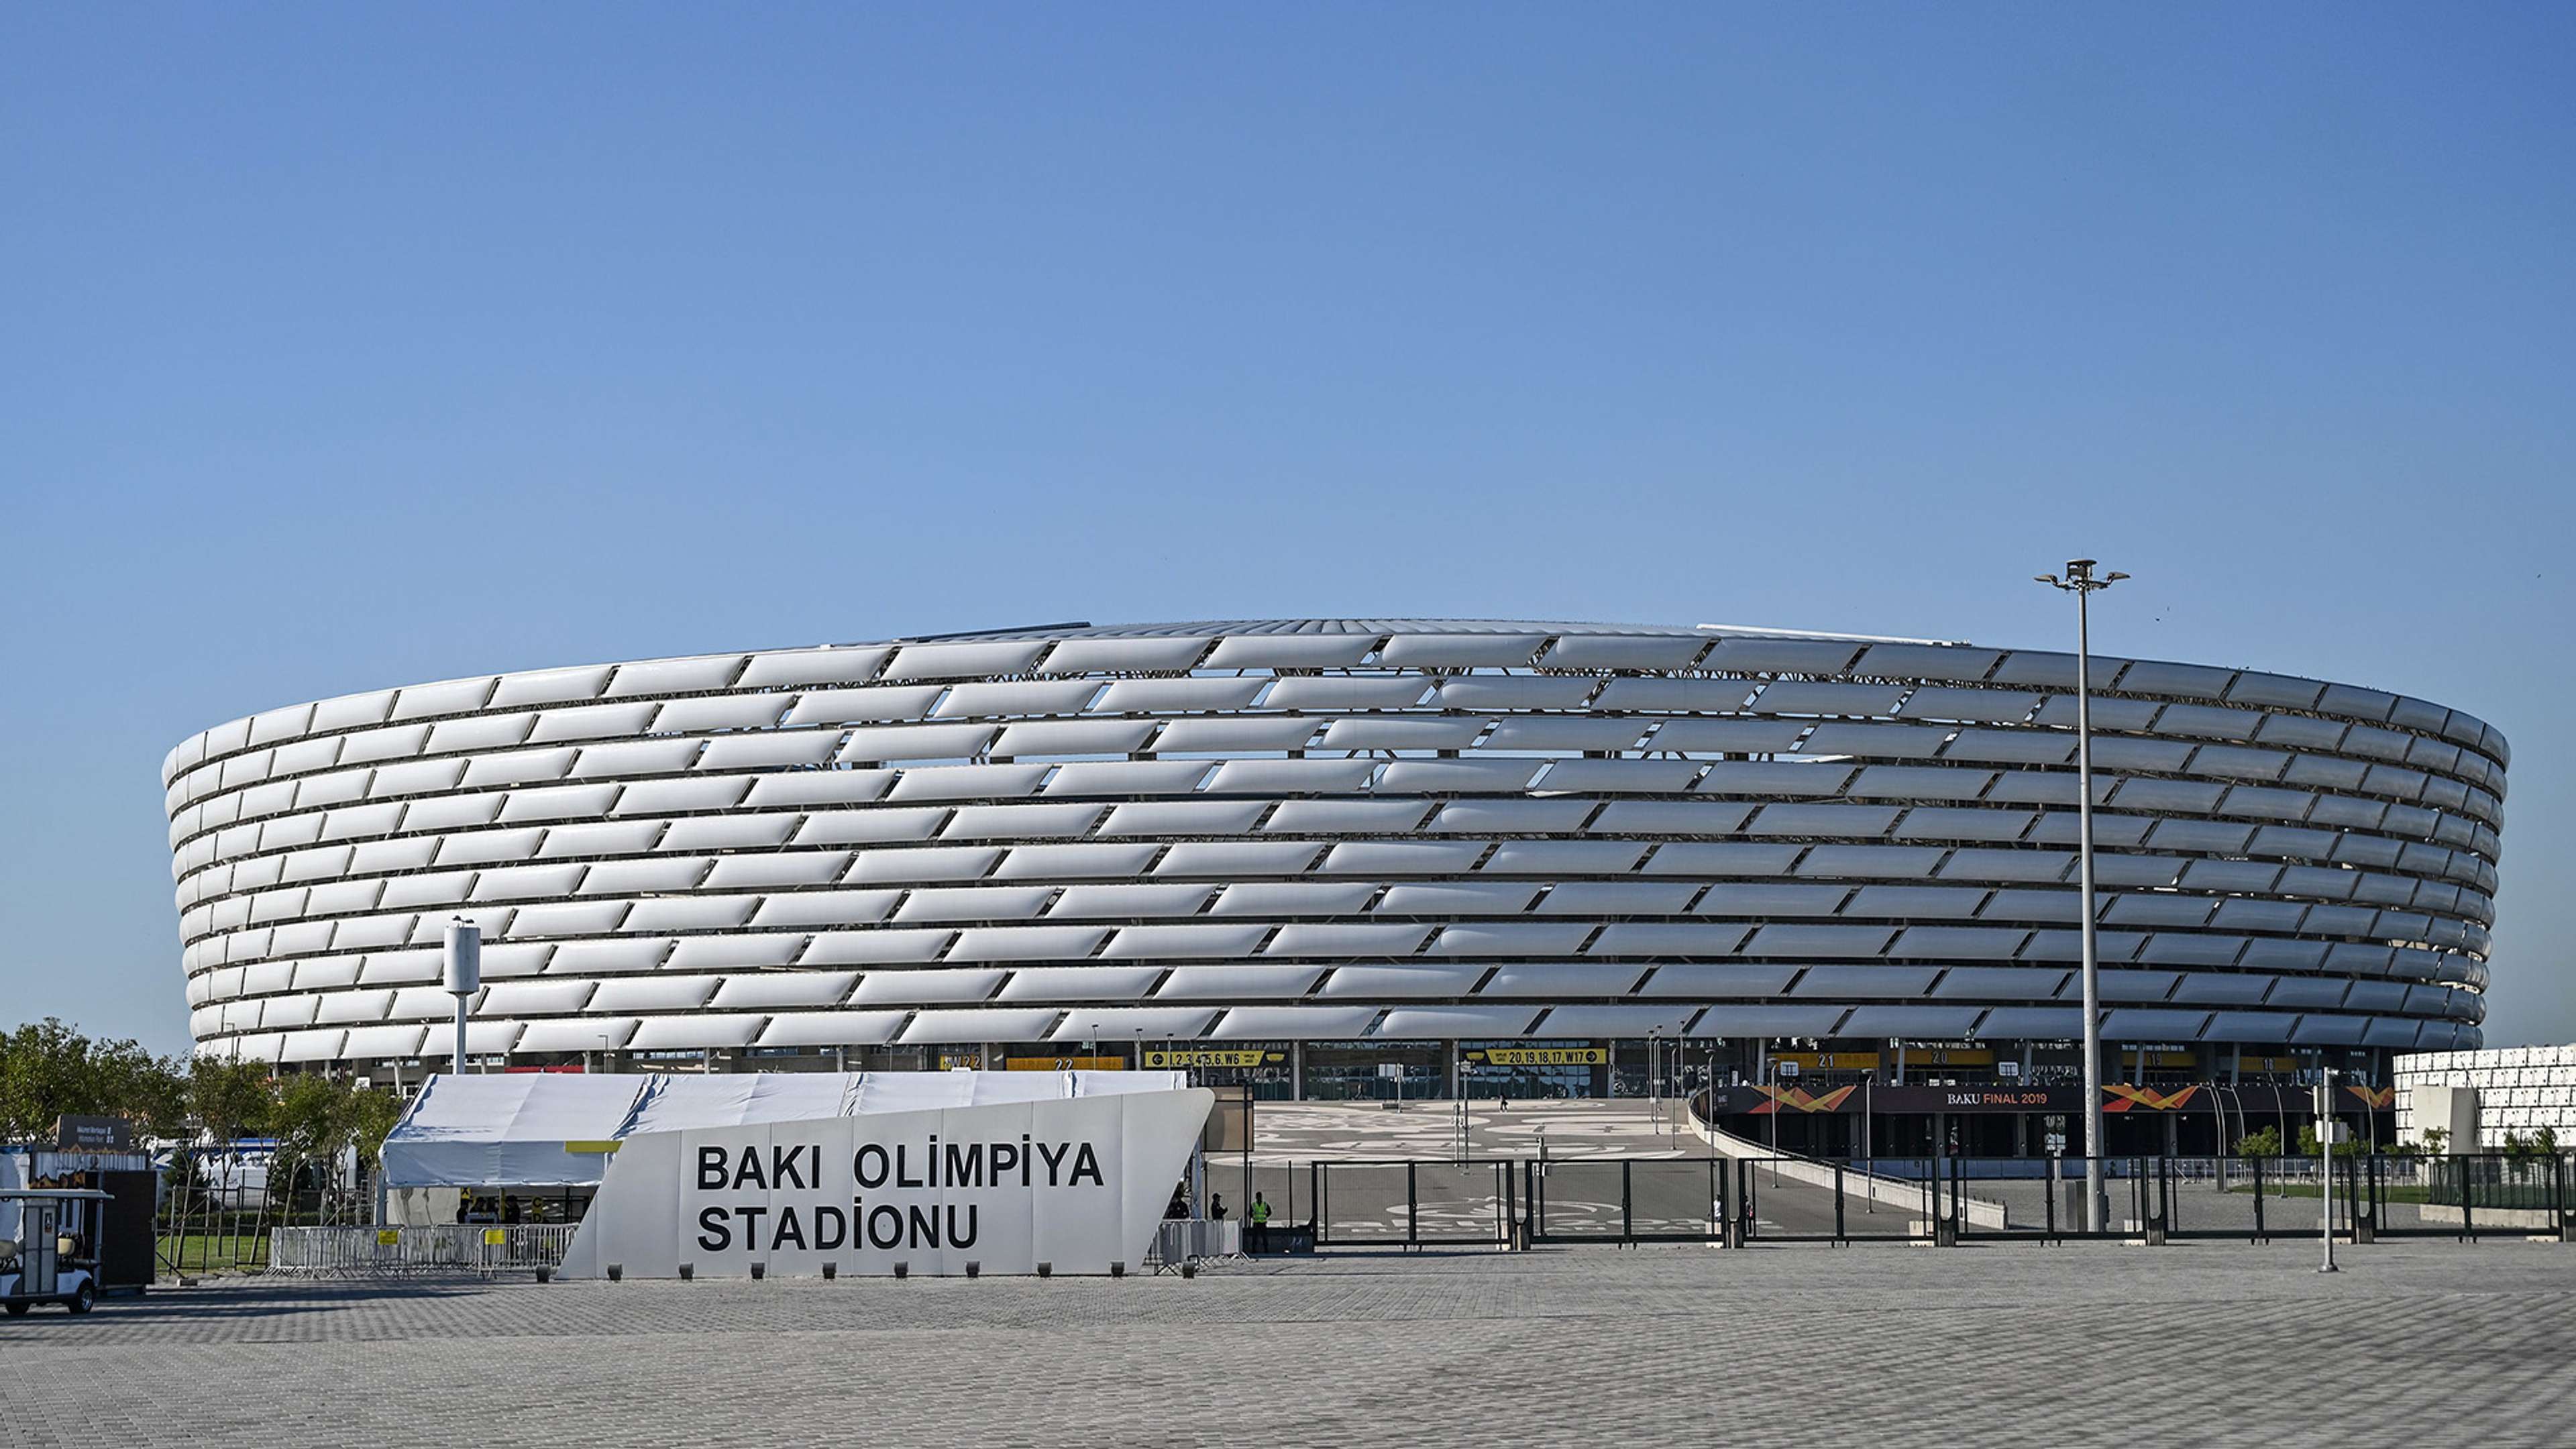 Olympic Stadium Baku general view